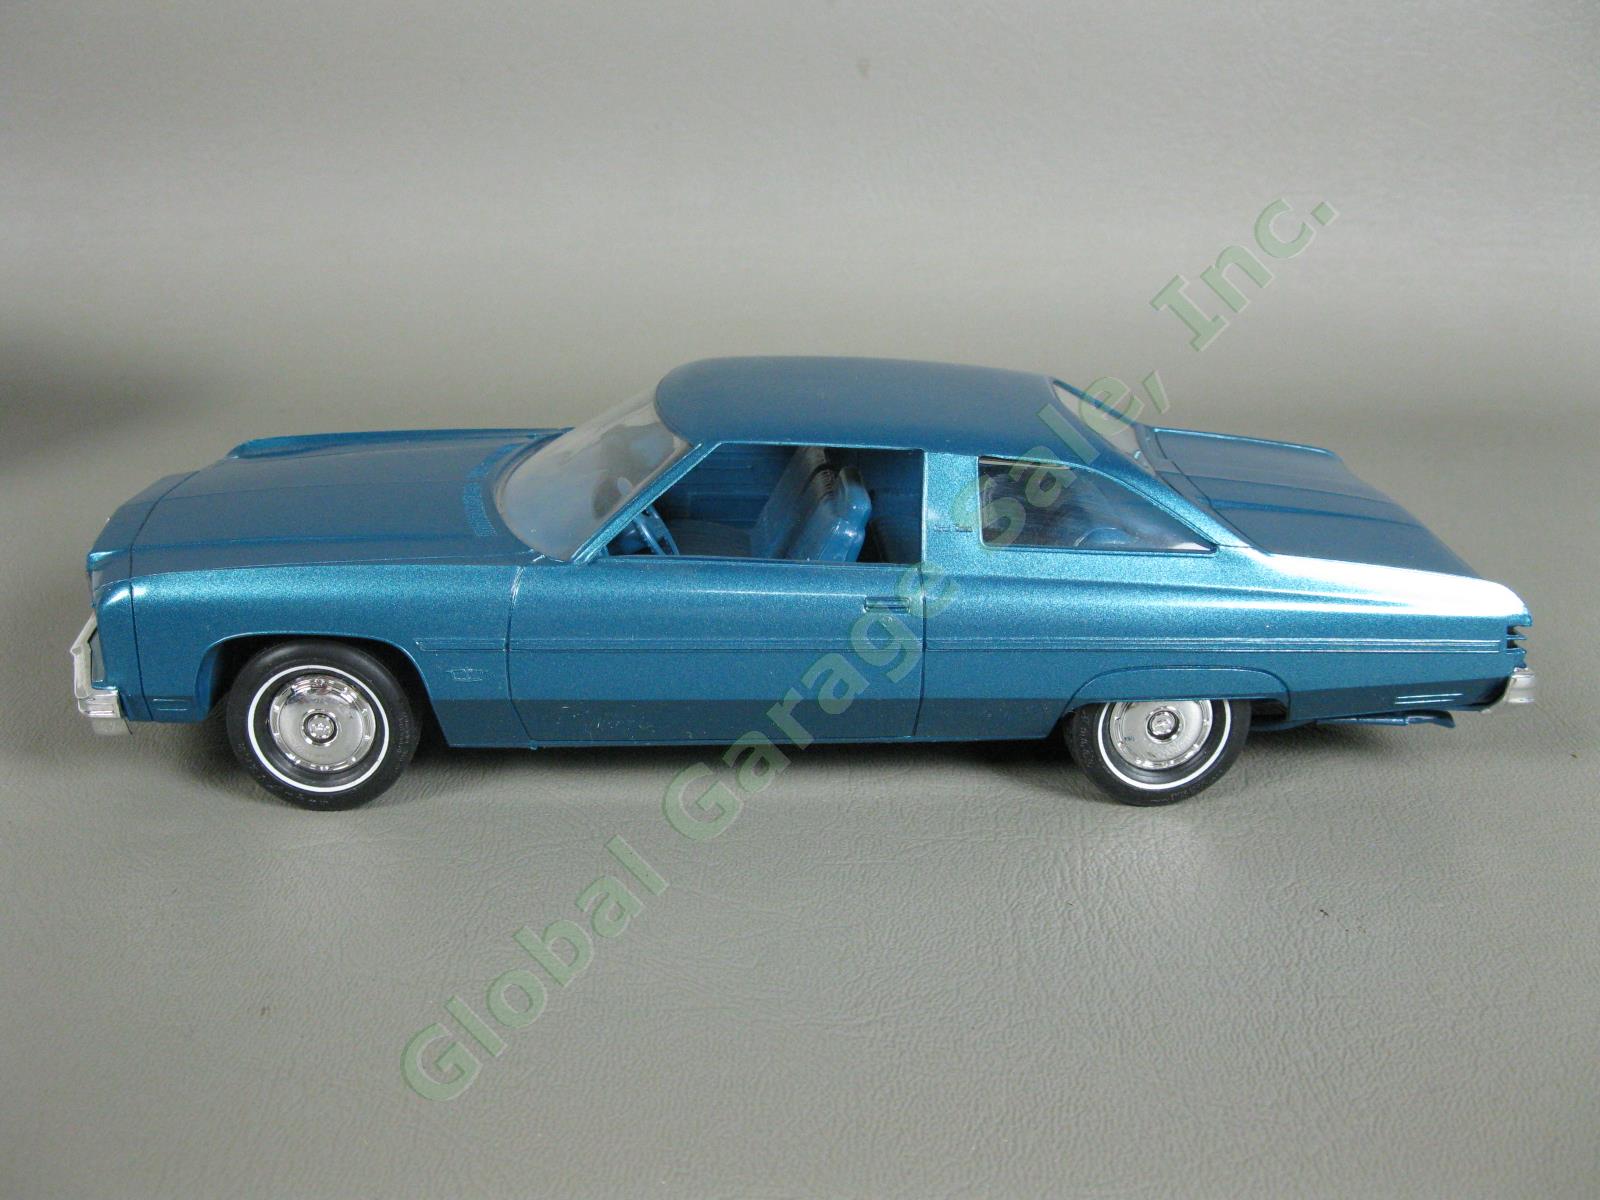 Original VTG 1975 Chevrolet Caprice Classic Blue Plastic Dealer Promo Model Car 1